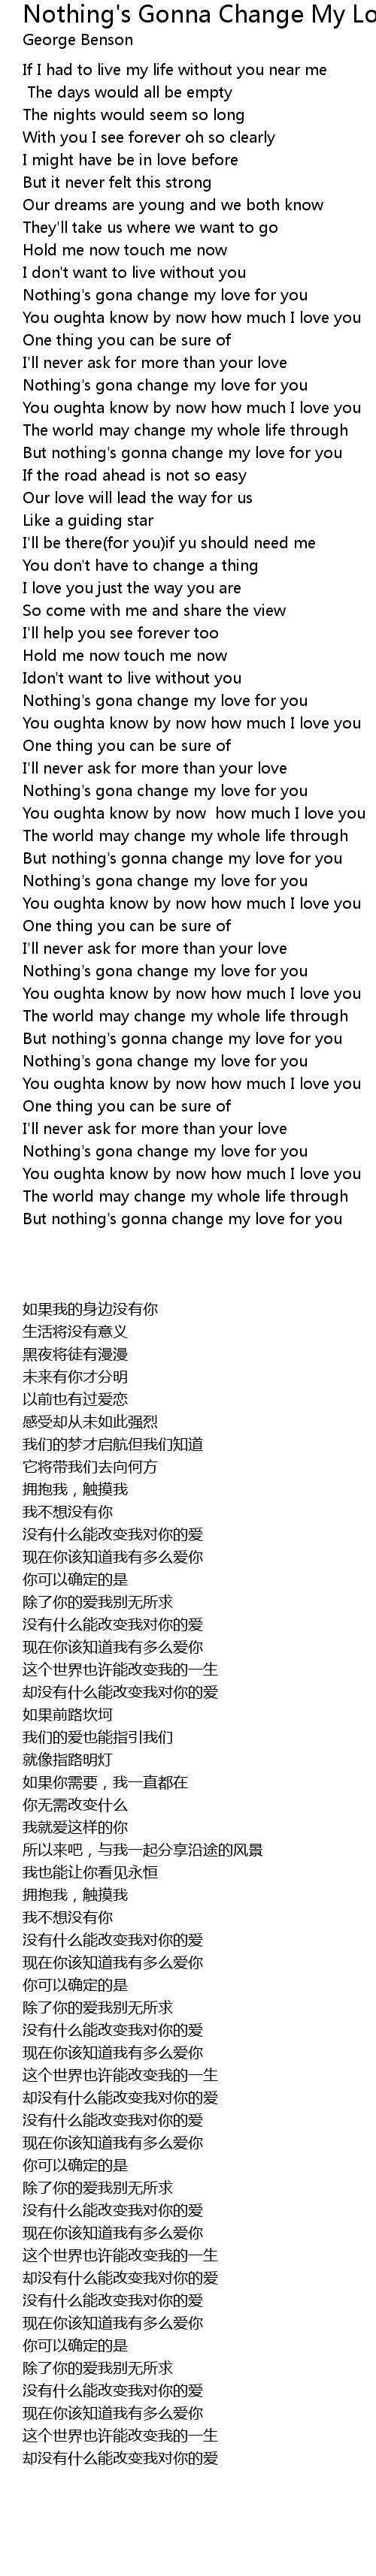 Nothing gonna change my love for you lyrics